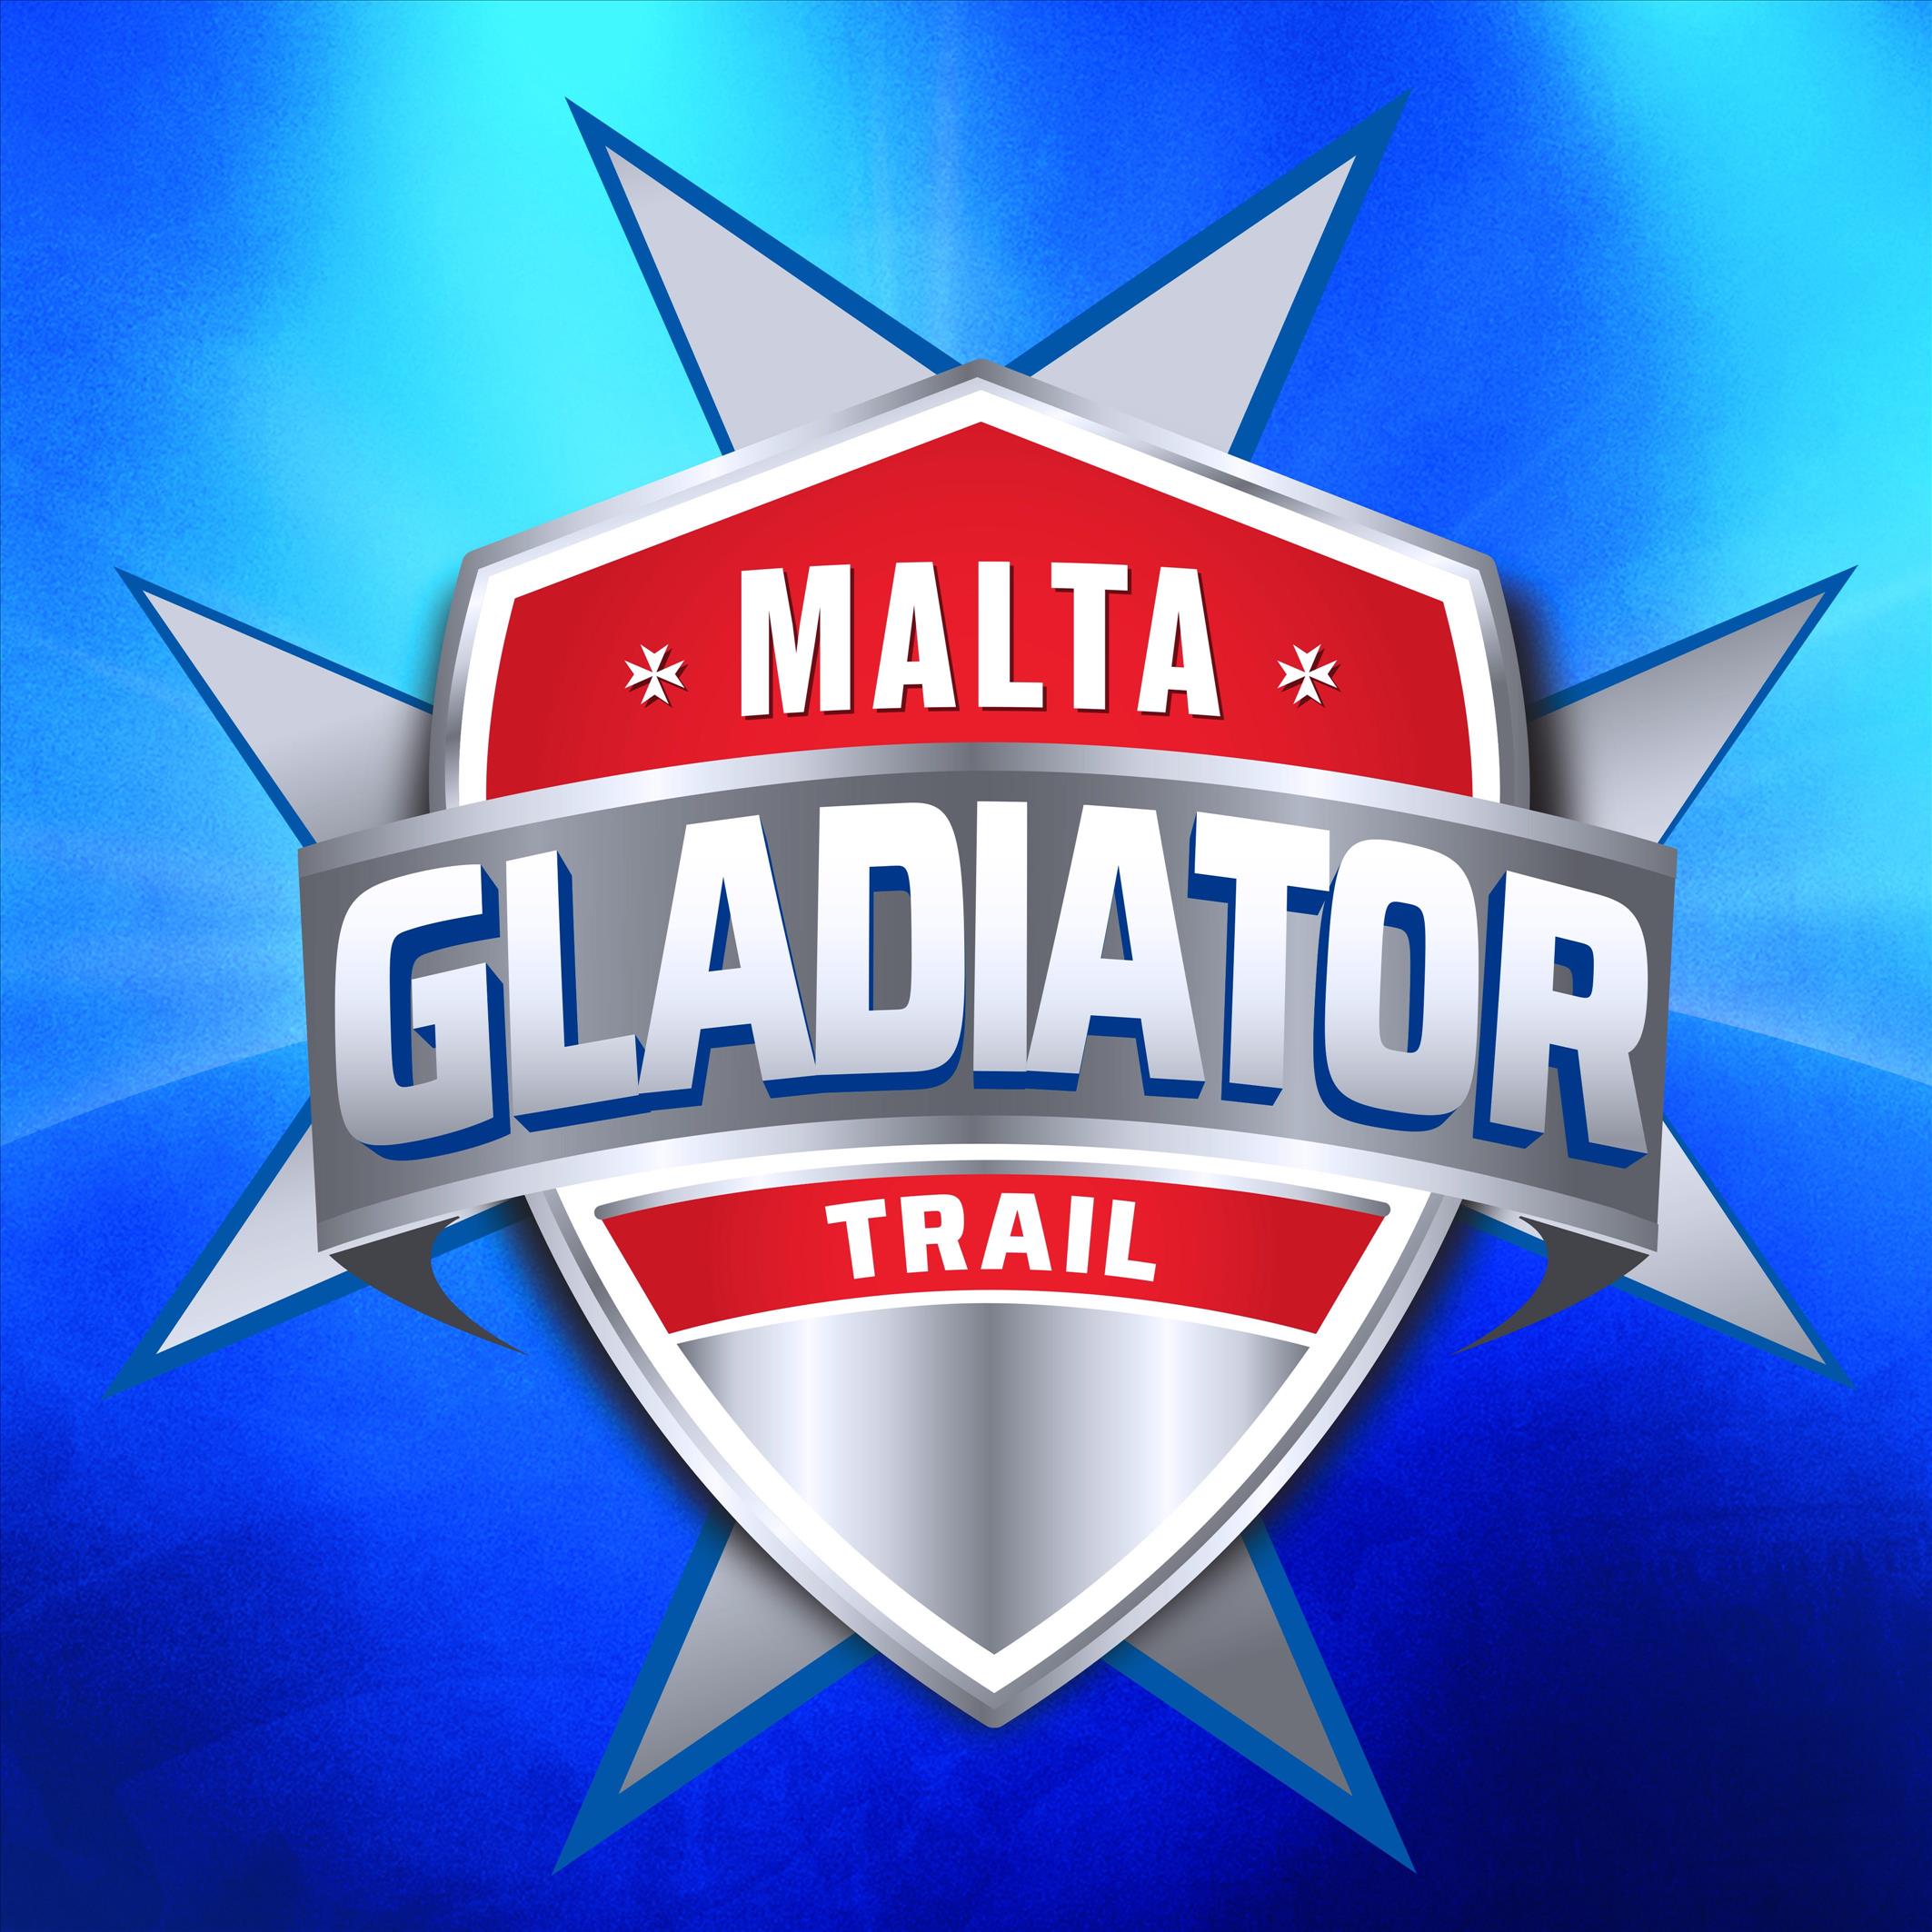 Gladiator Trail Malta 2020 - Training Time Trials poster